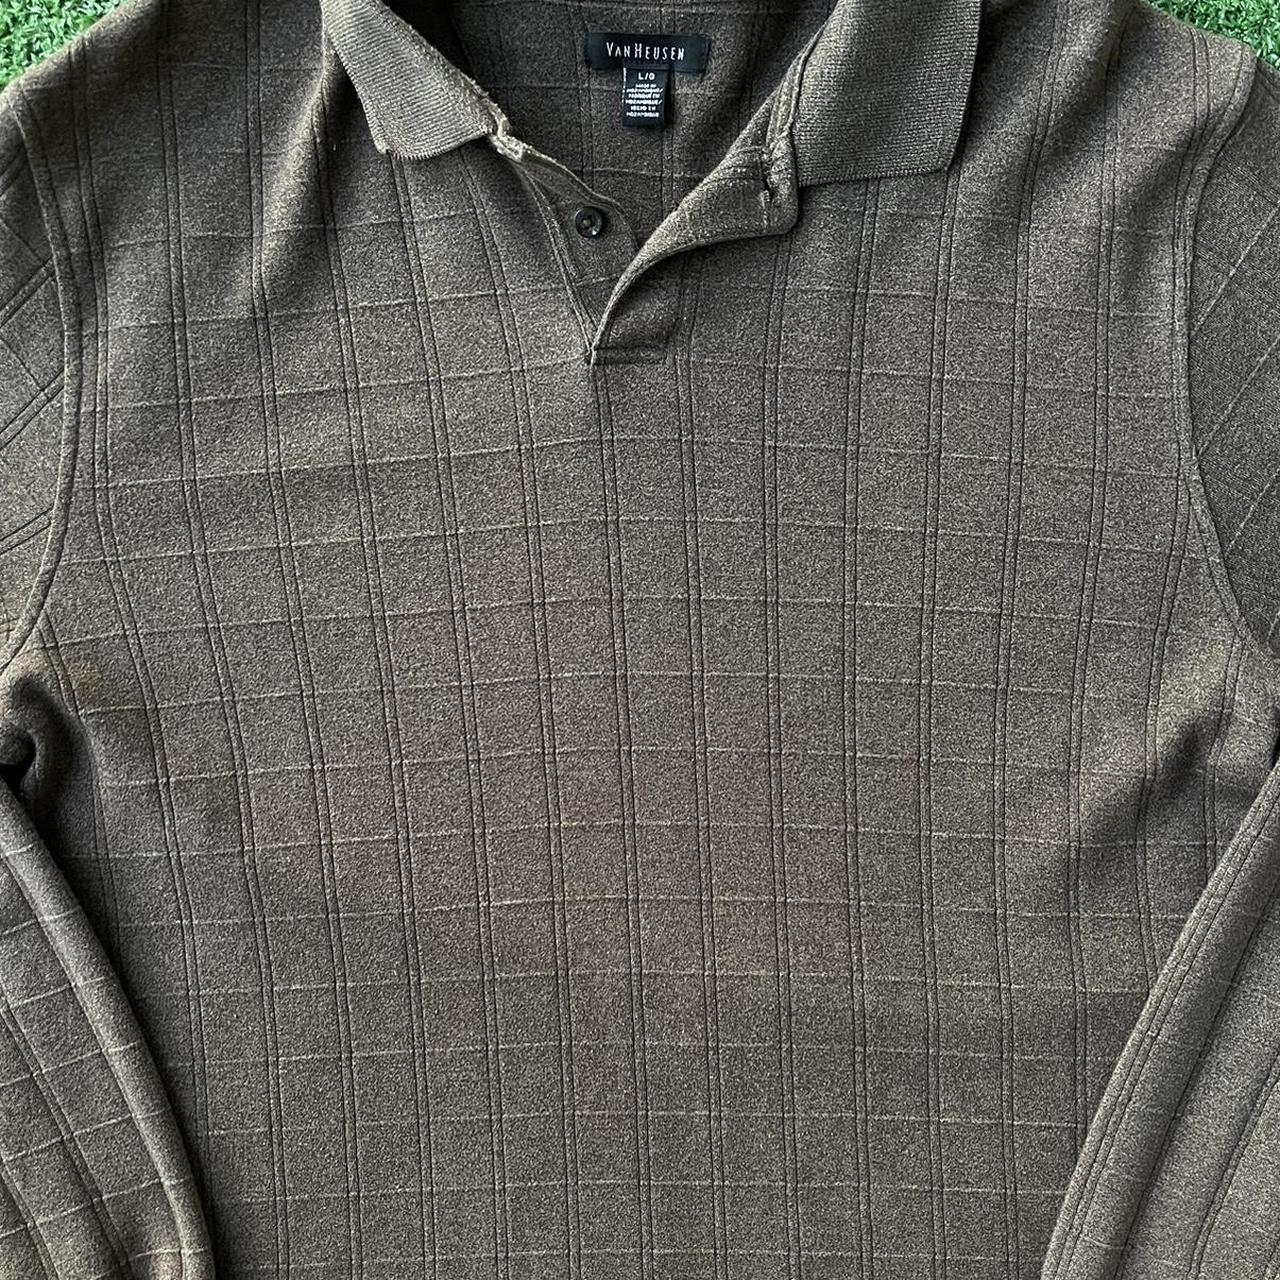 Van Heusen Men's Brown and Green Polo-shirts (3)